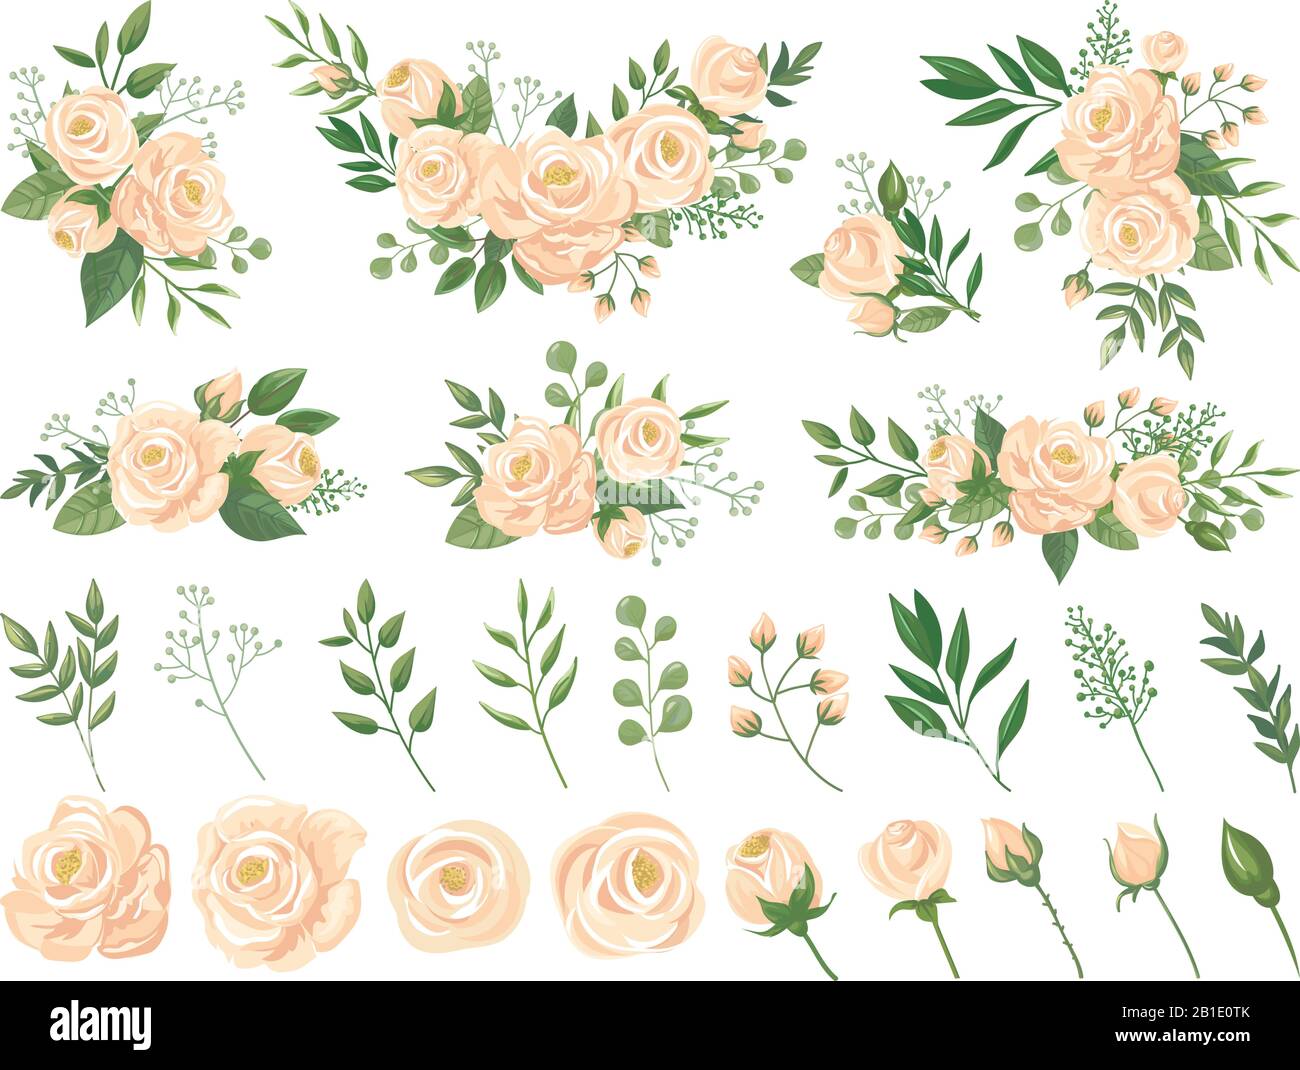 Blumenstrauß. Rosenblümchen, Gartenrosen Blumensträuße und Pastellfarben Blumenknospen mit Blumenblättern Cartoon-Vektor-Illustrations-Set Stock Vektor